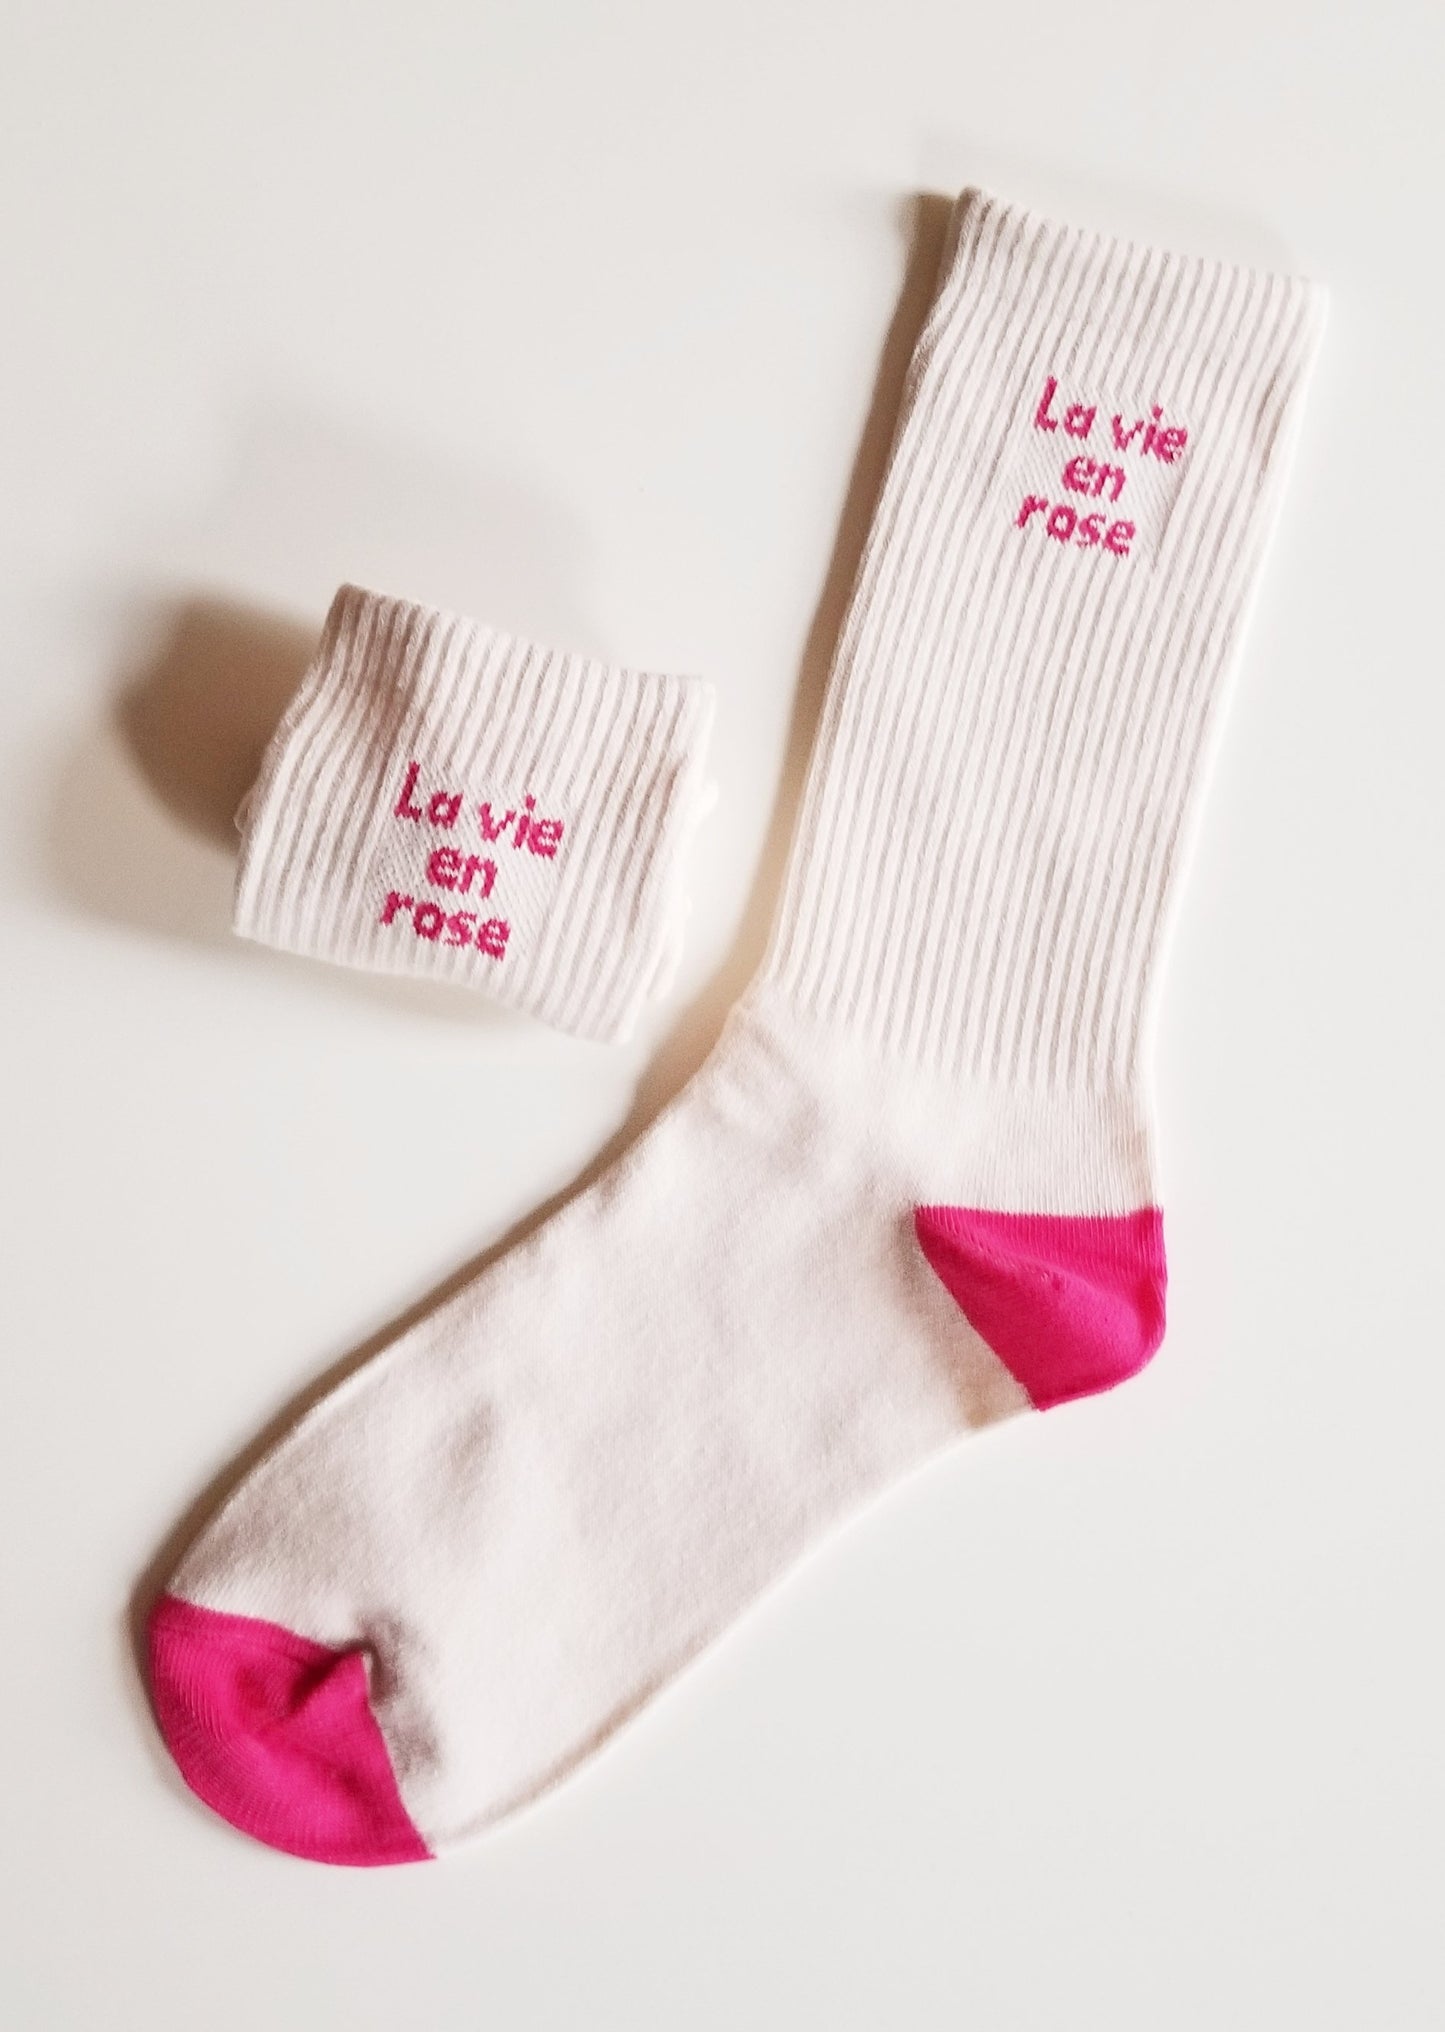 Socks La vie en rose wom(men)